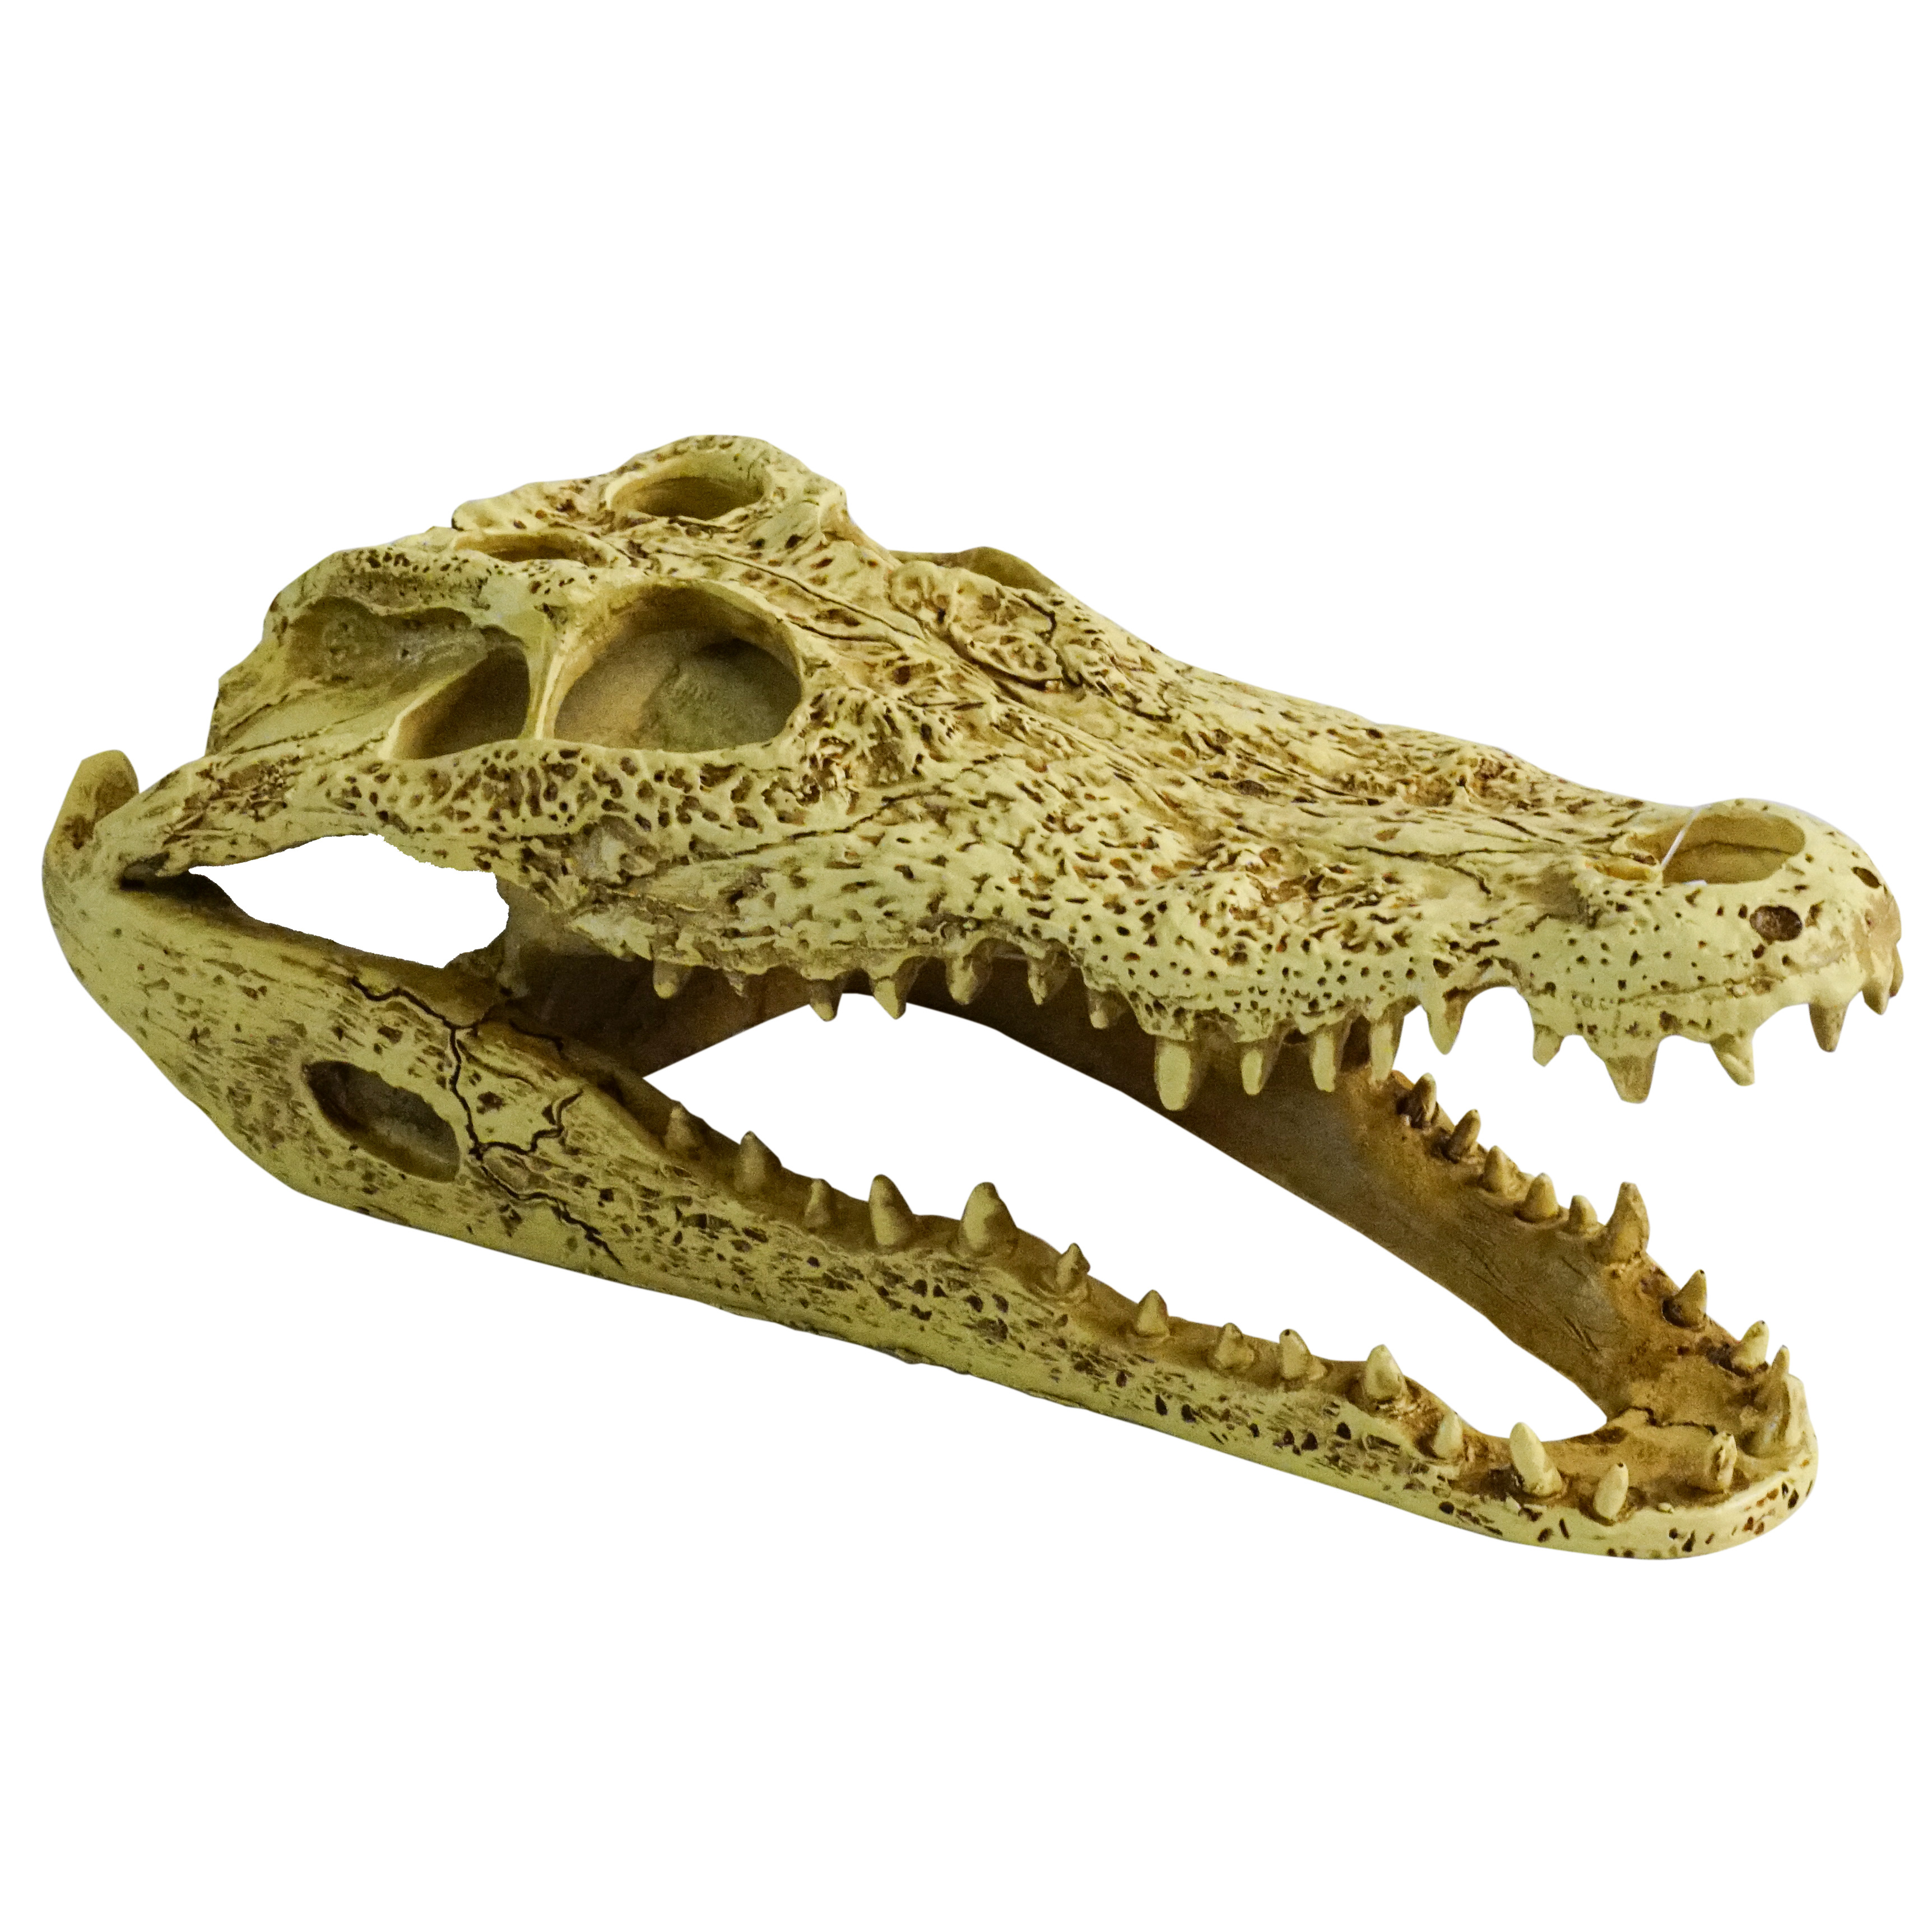 ProRep Crocodile Skull 24x11.5x9cm